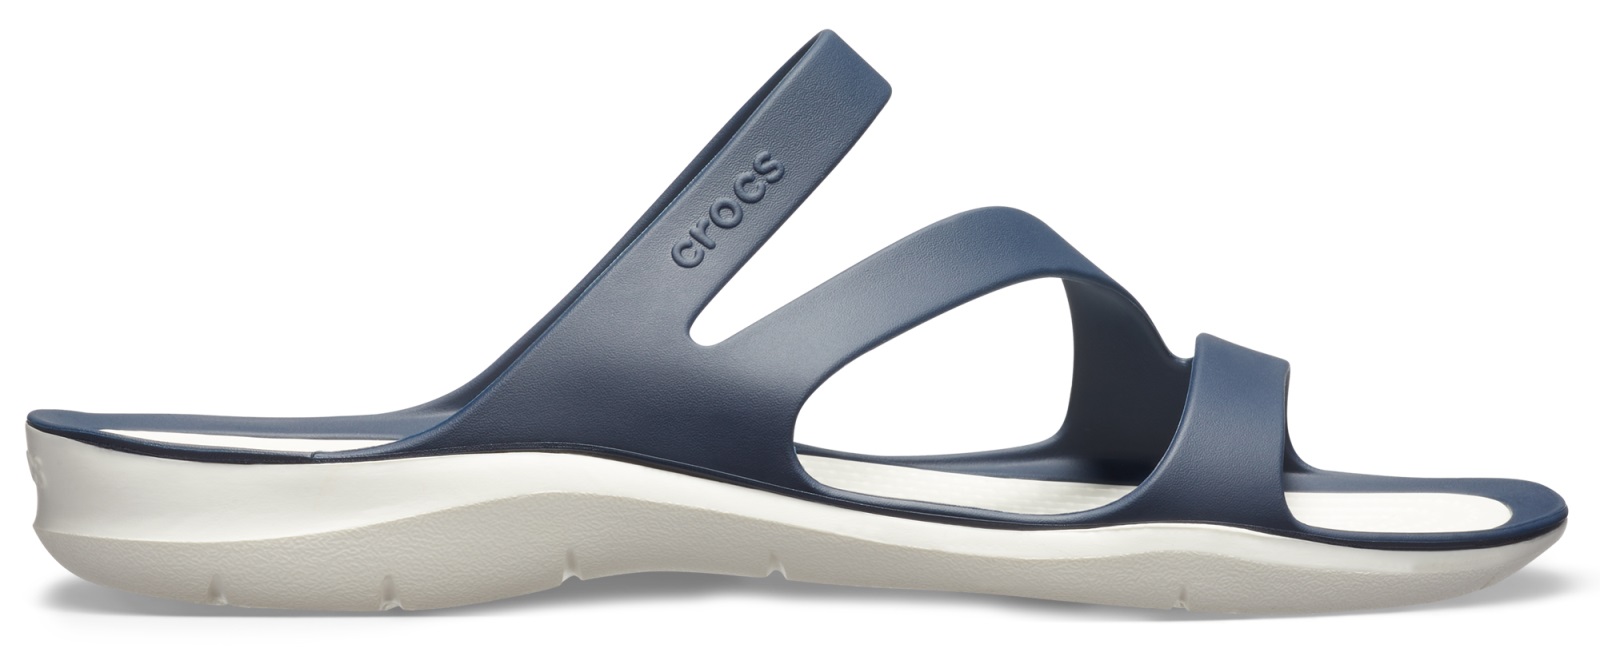 Dámské sandály Crocs SWIFTWATER tmavě modrá/bílá 34-35